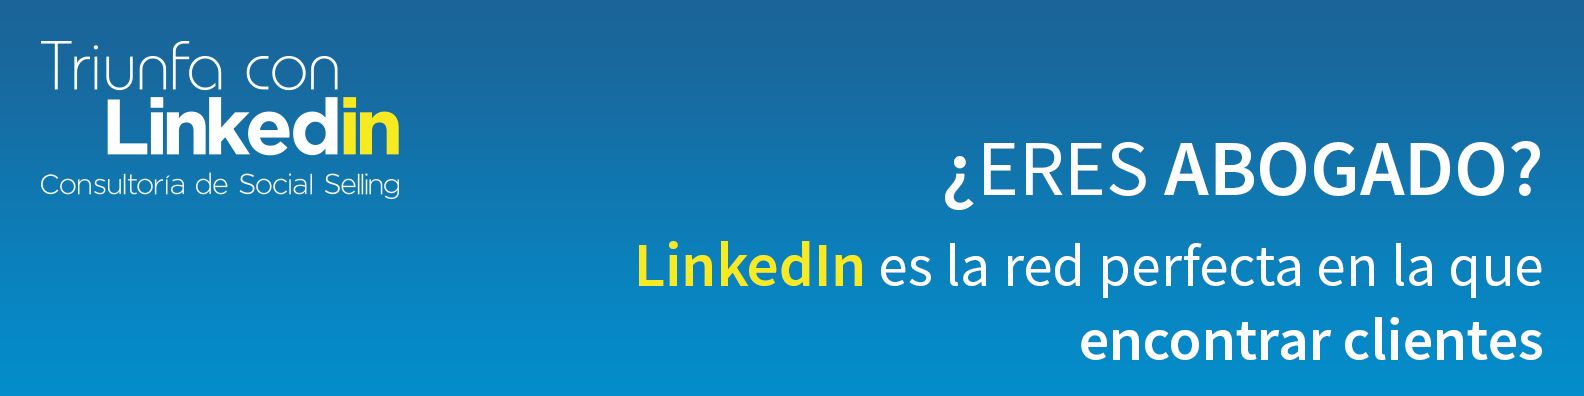 LinkedIn es la red perfecta para encontrar clientes si eres abogado